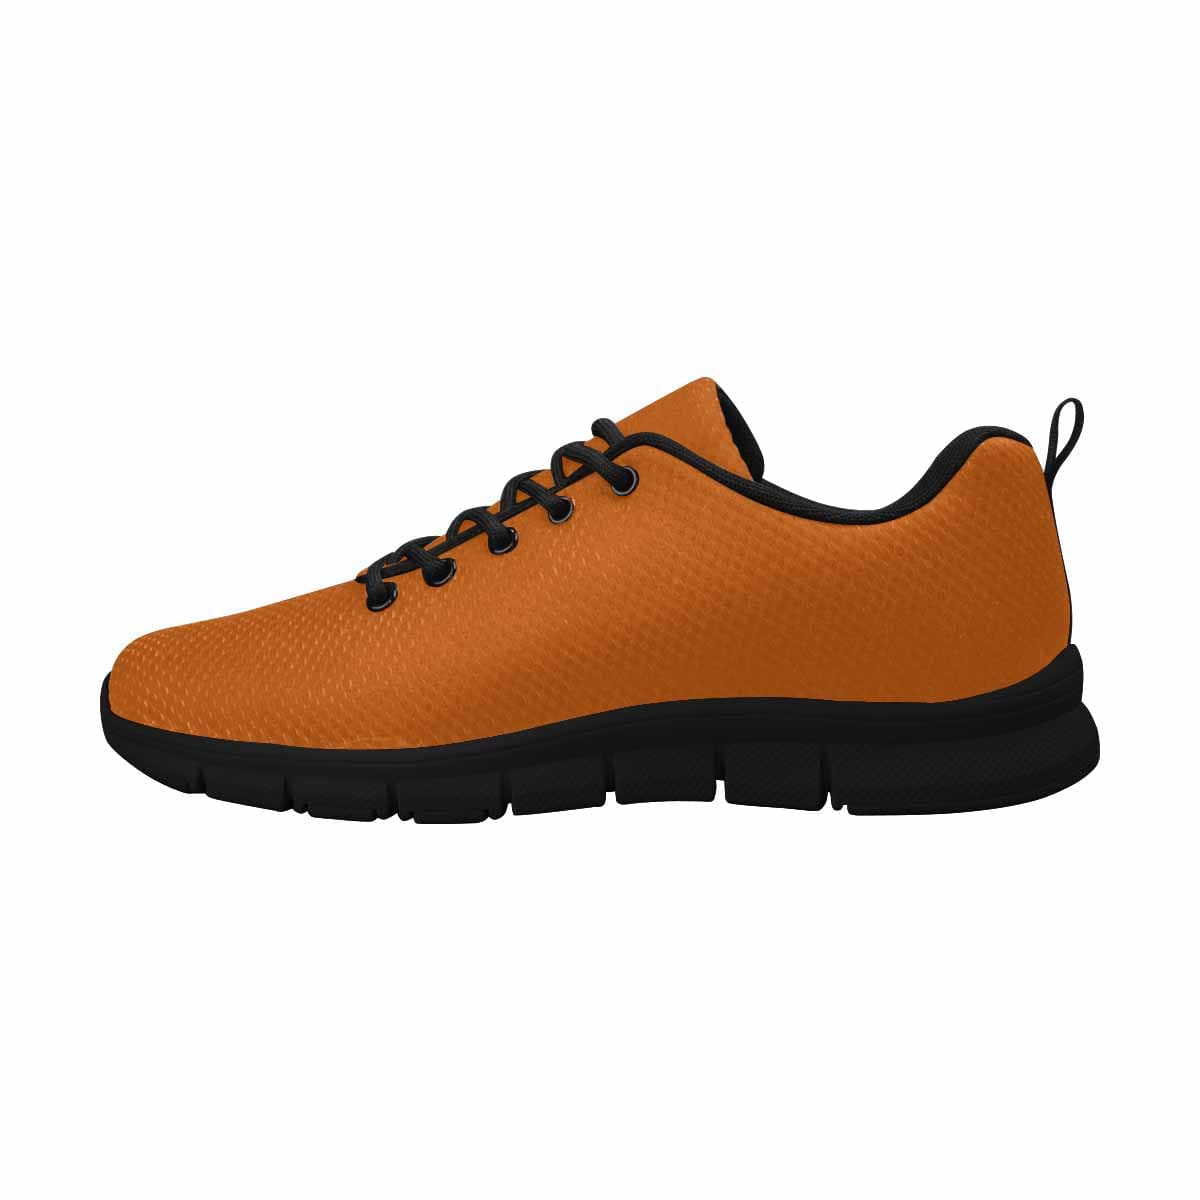 Sneakers For Men Burnt Orange Running Shoes - Mens | Sneakers | Running